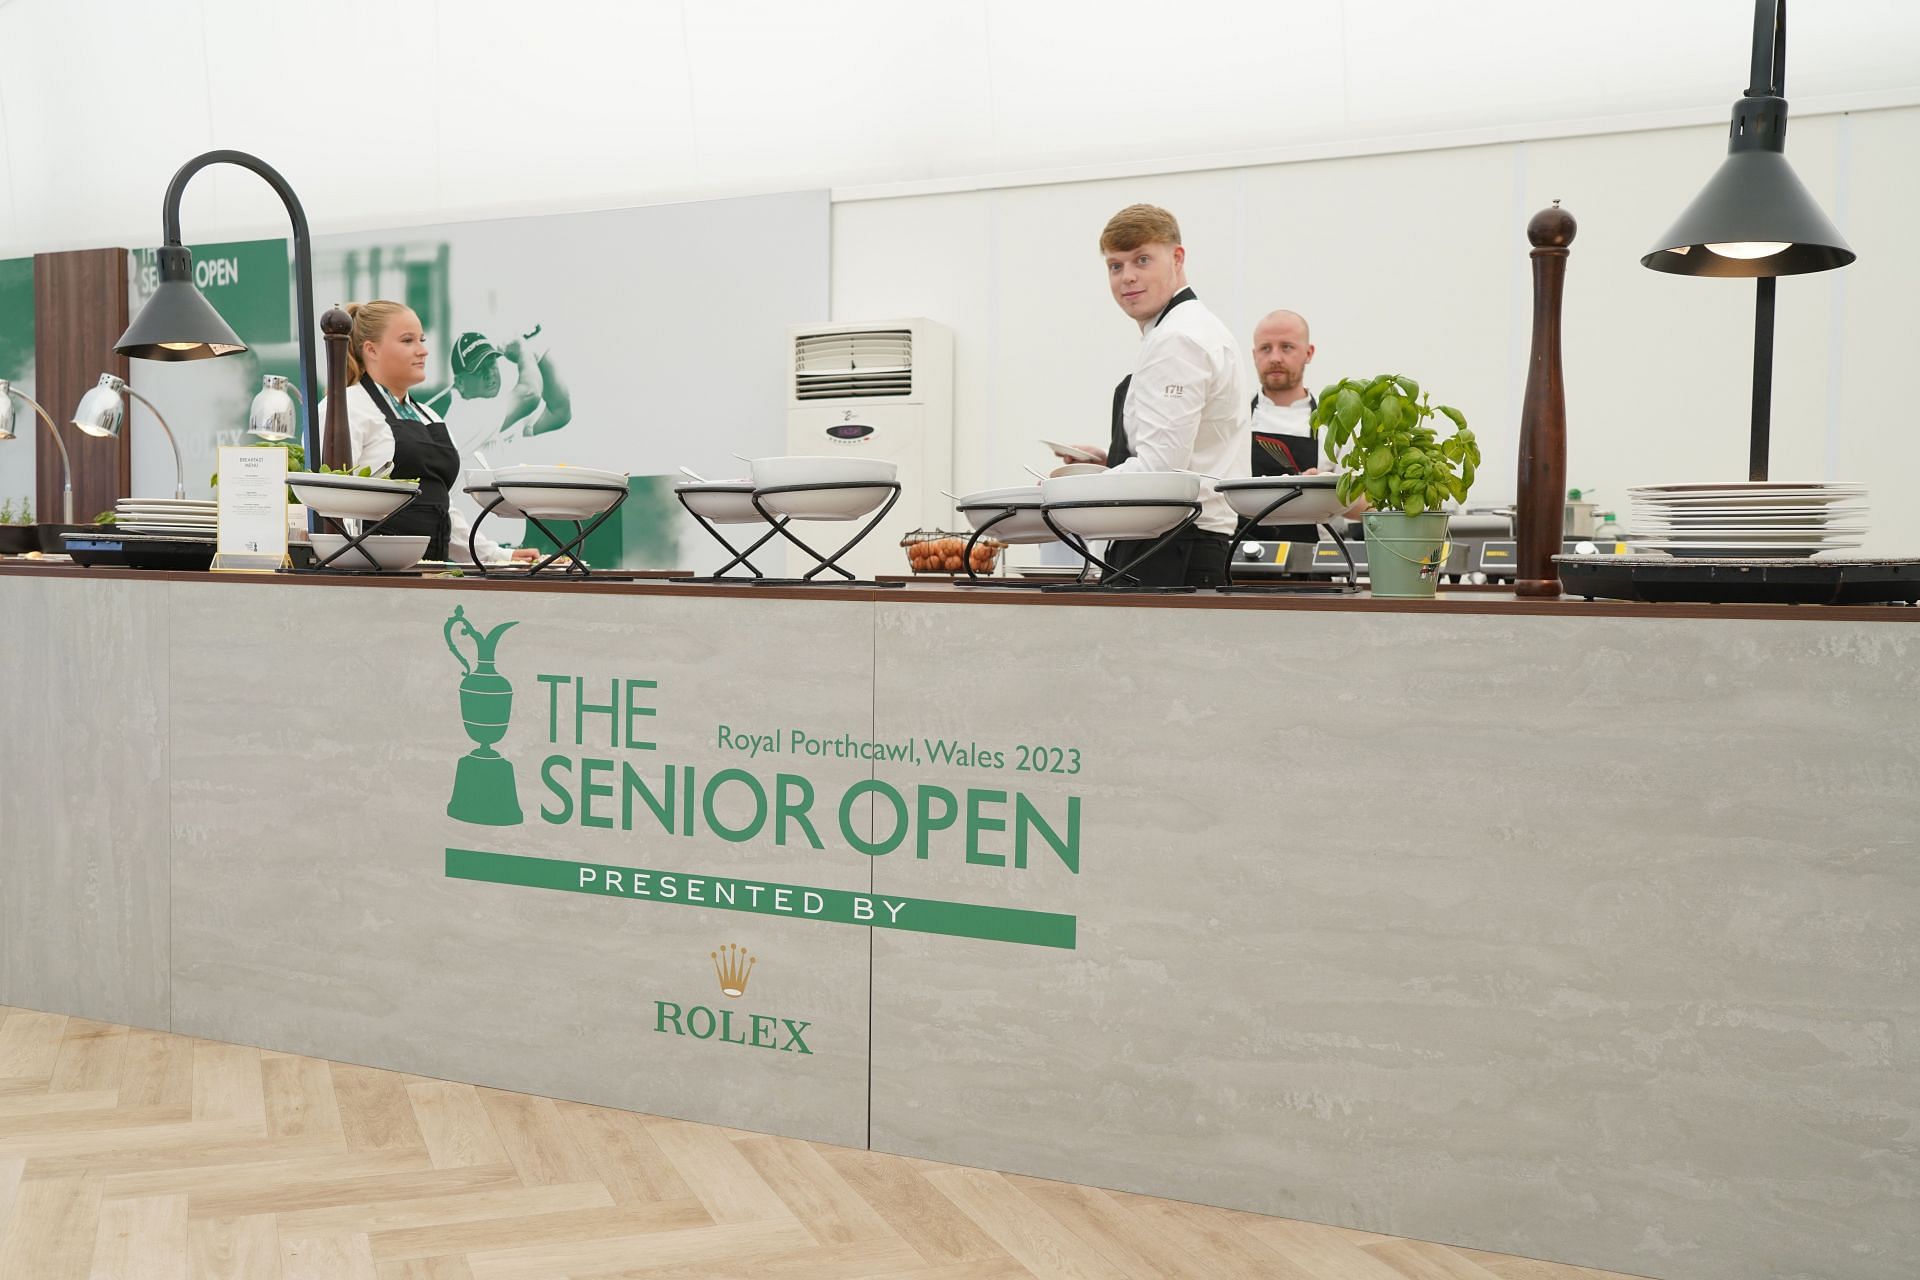 BRIEF: The Senior Open Presented by Rolex